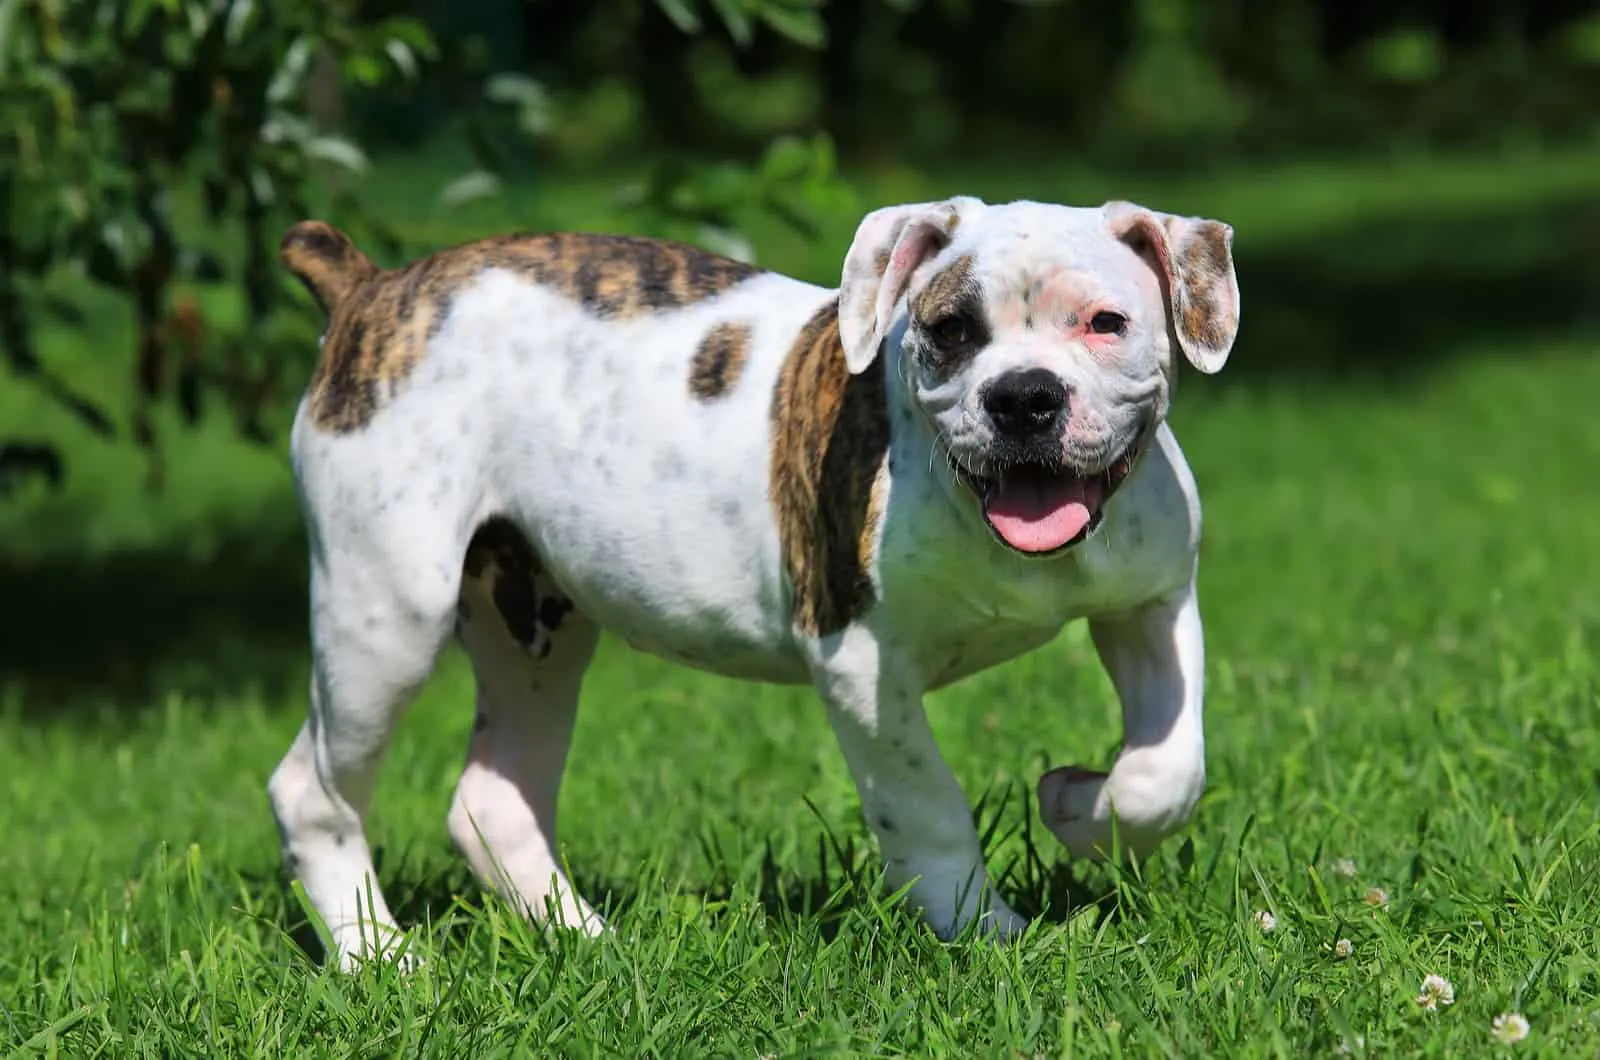 Beautiful American Bulldog puppy standing on the grass